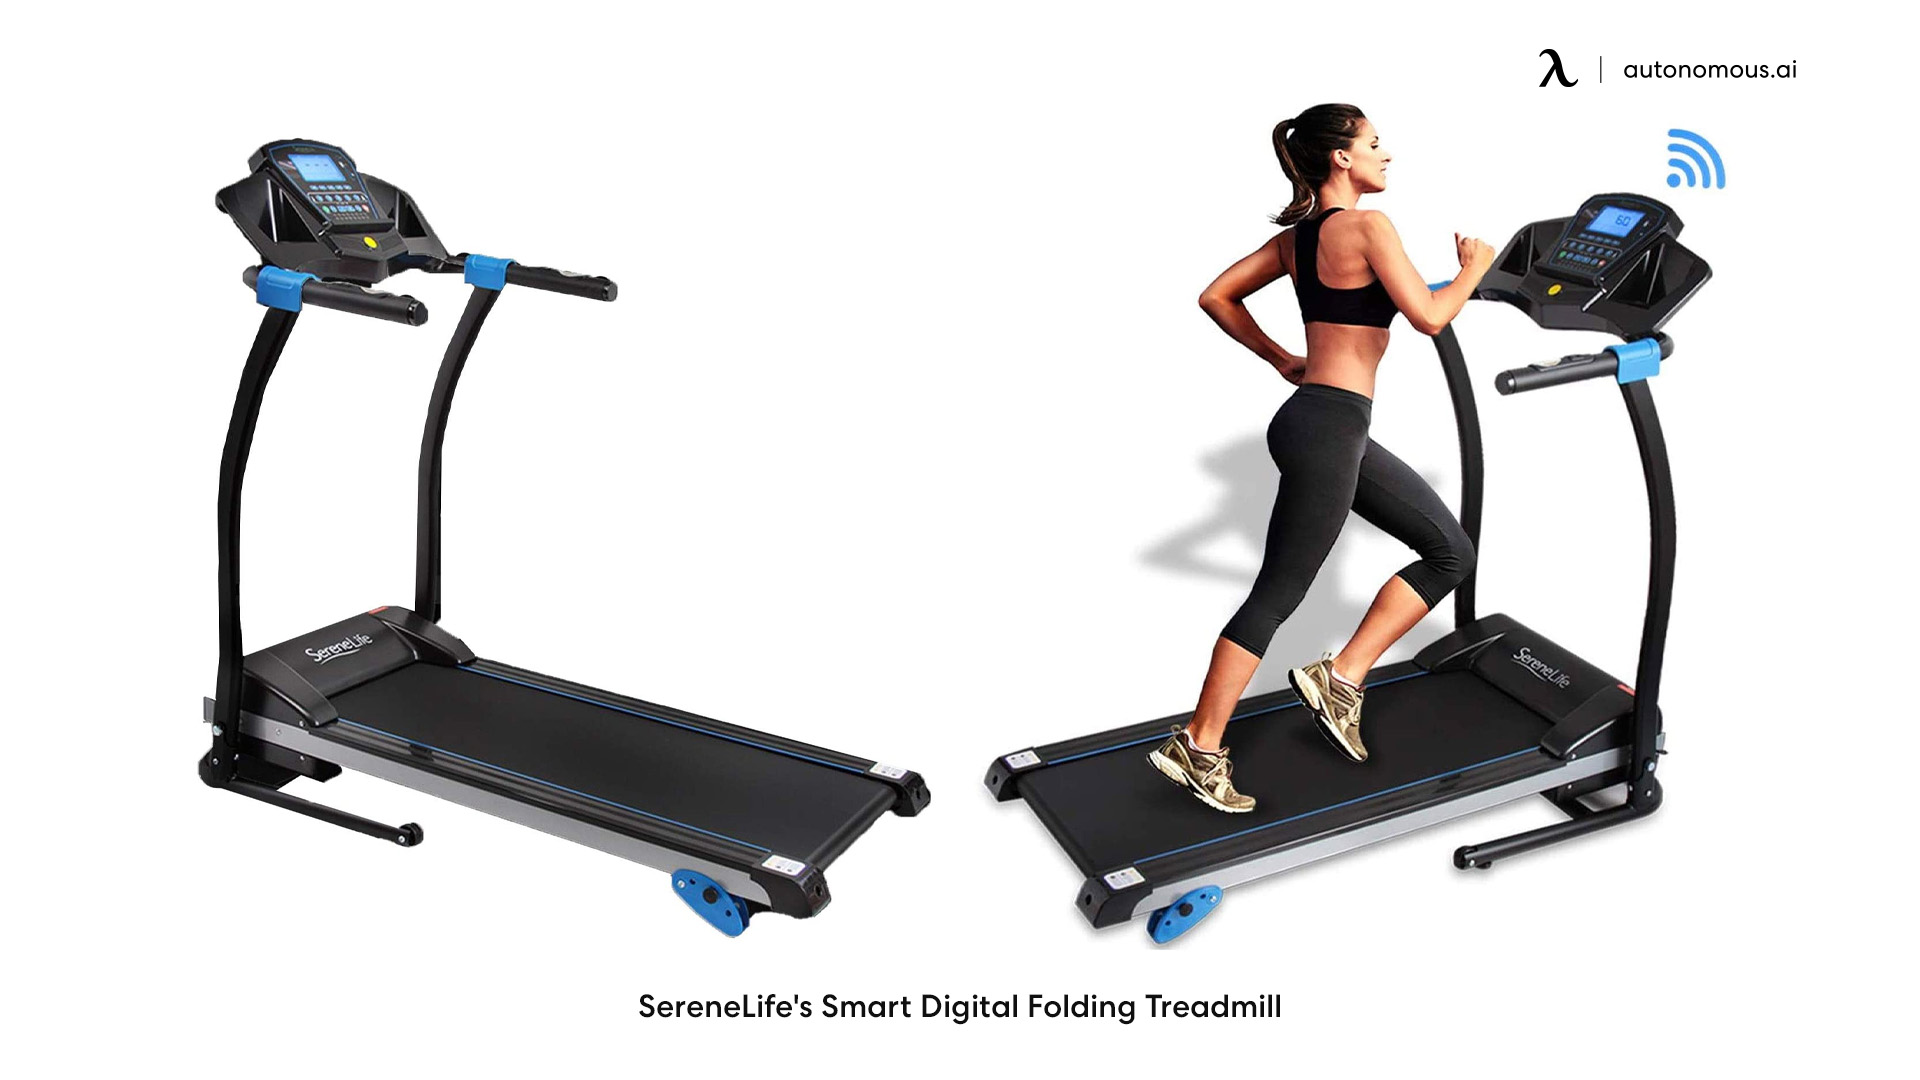 SereneLife's Smart Digital Folding Treadmill